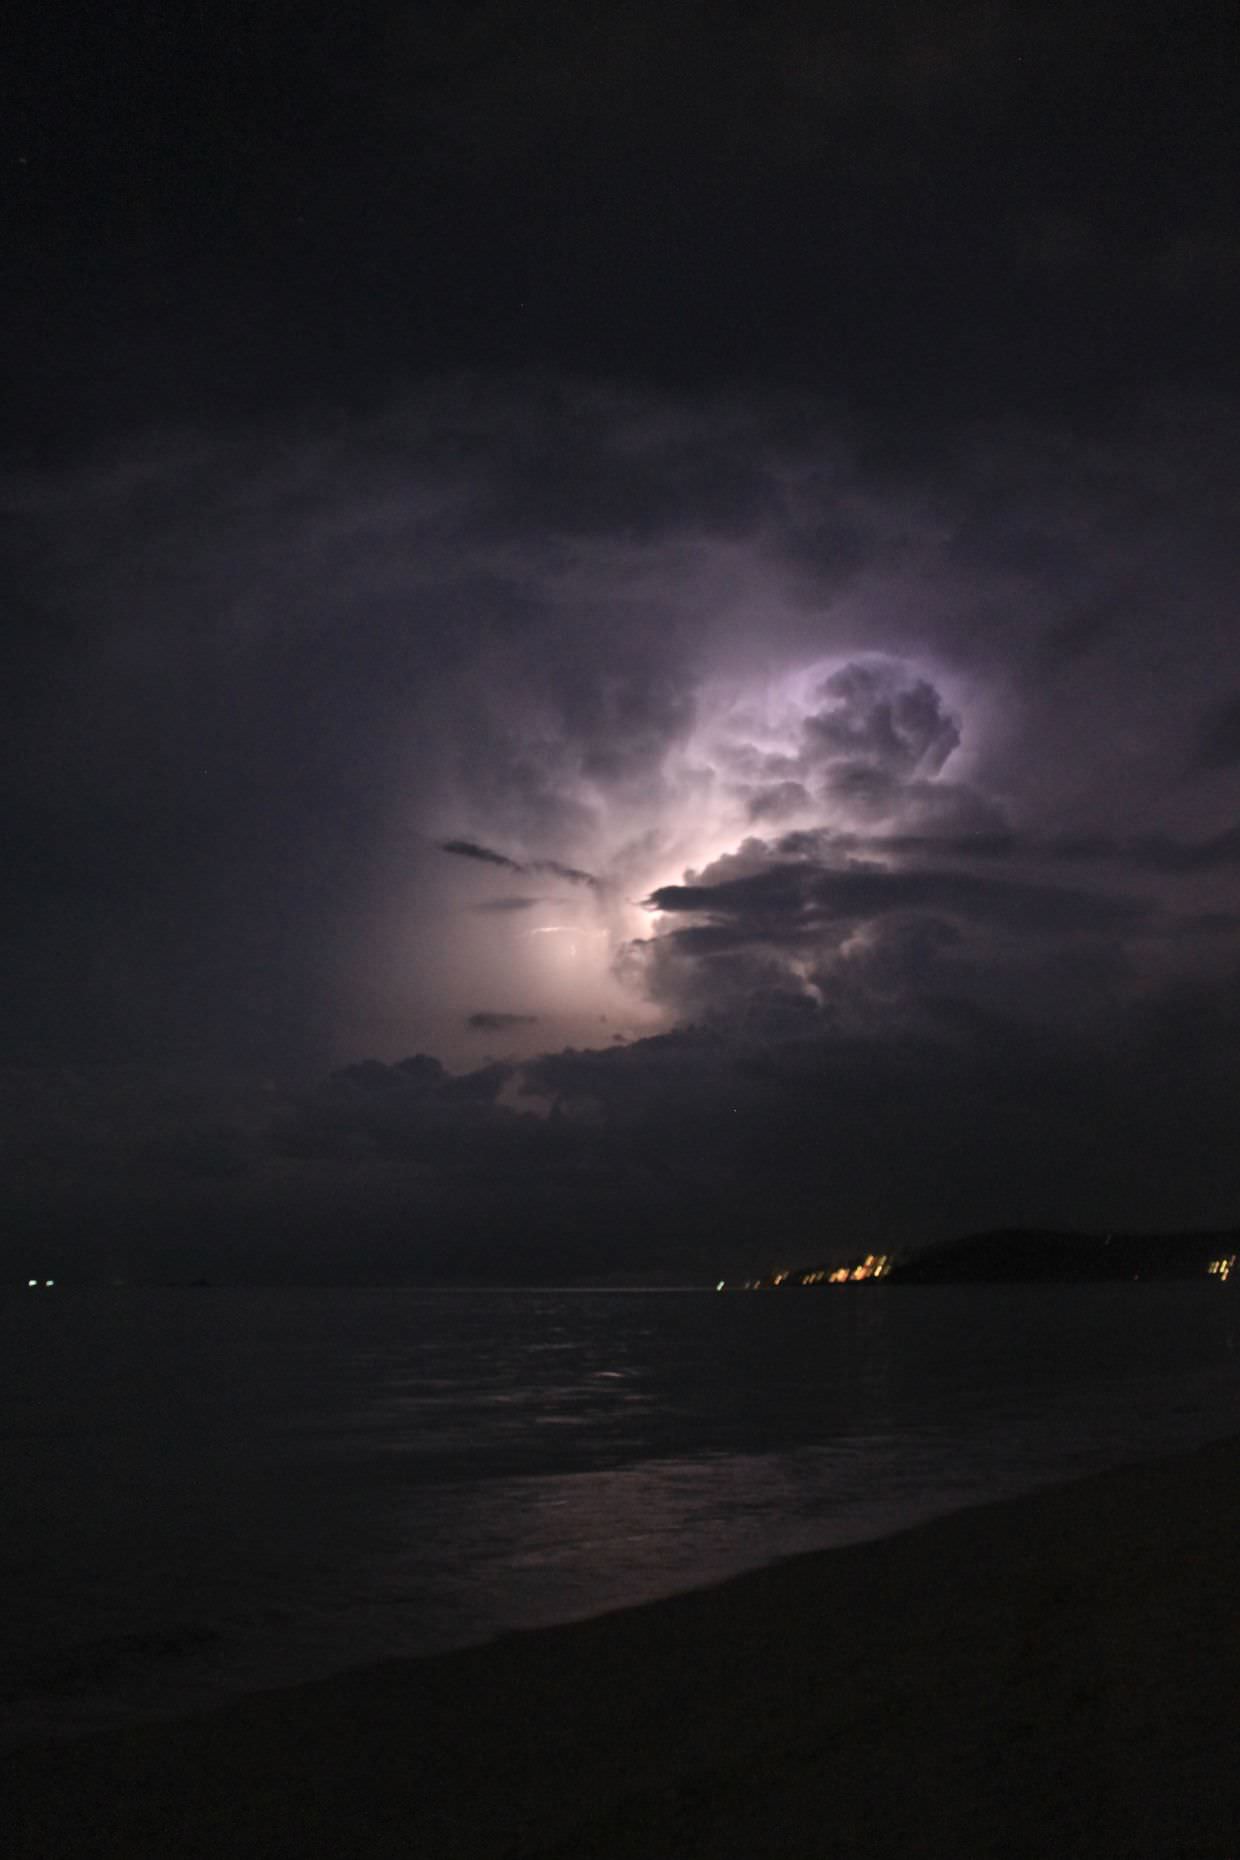 Lightning storm off the coast